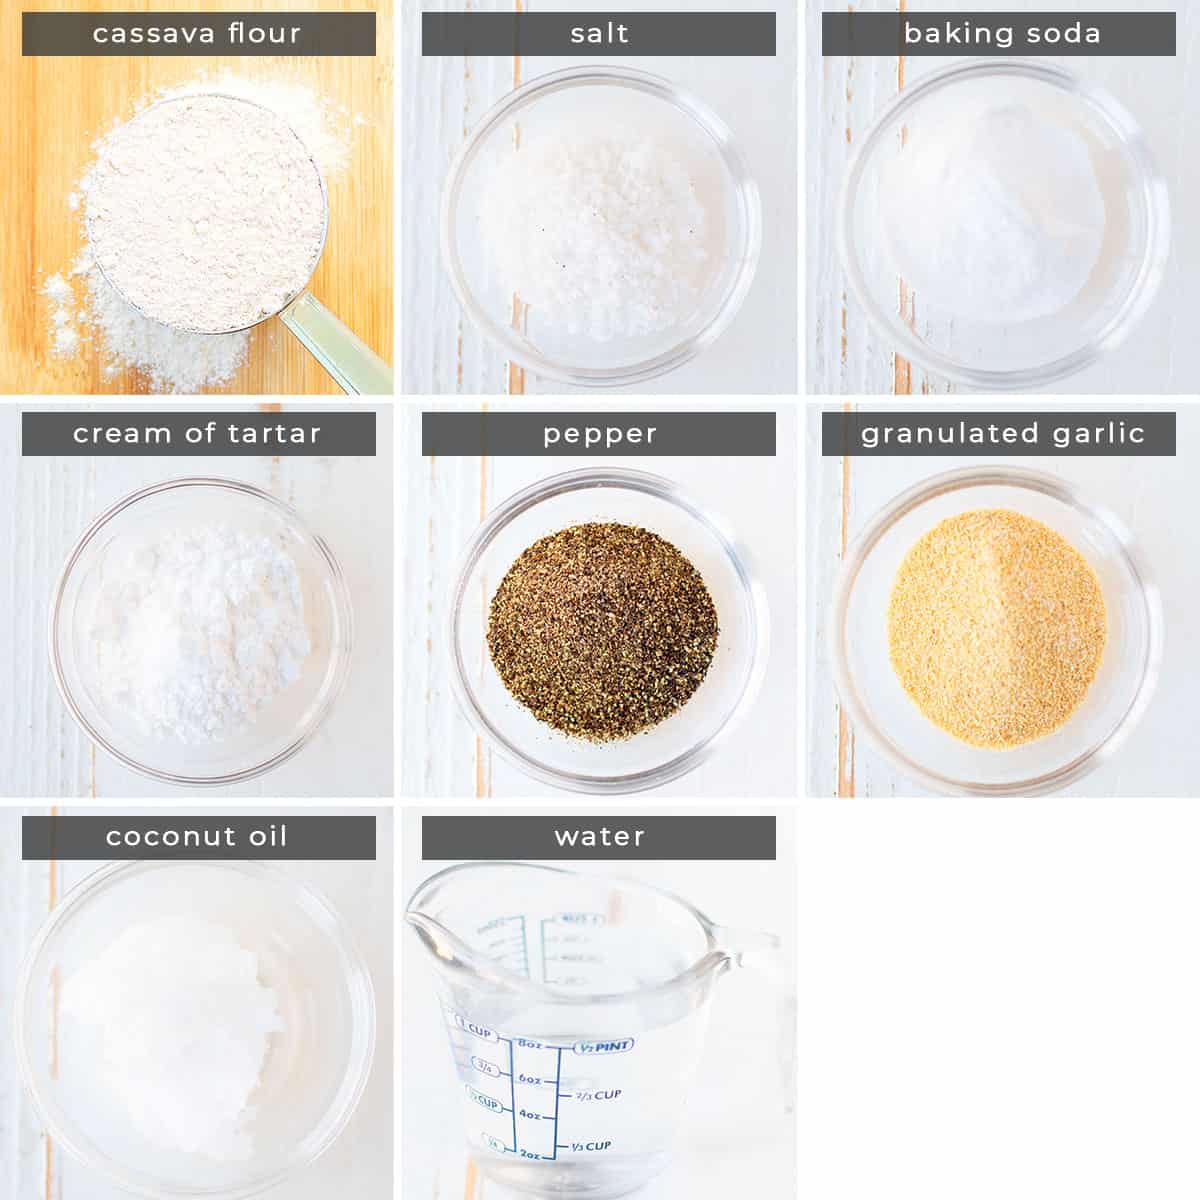 Image containing recipe ingredients cassava flour, salt, baking soda, cream of tartar, pepper, granulated garlic, coconut oil, and water.